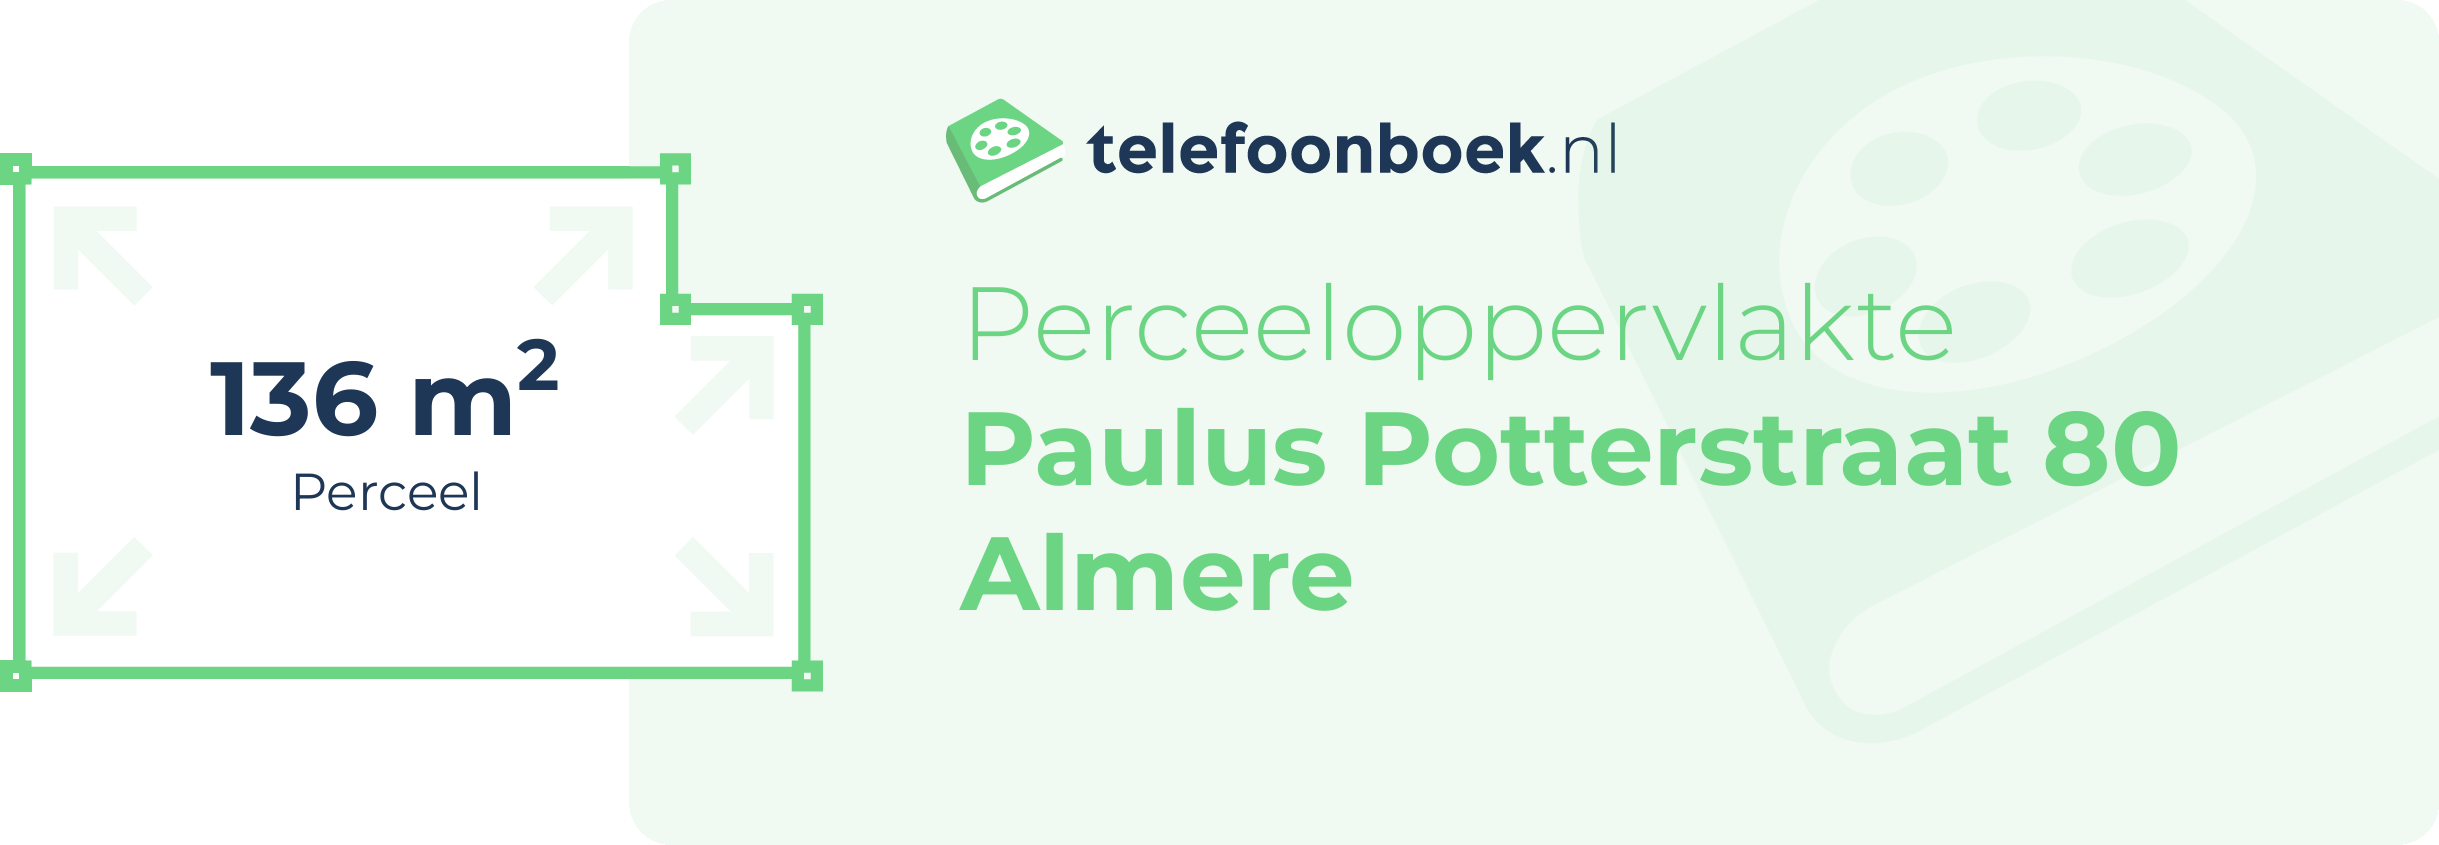 Perceeloppervlakte Paulus Potterstraat 80 Almere